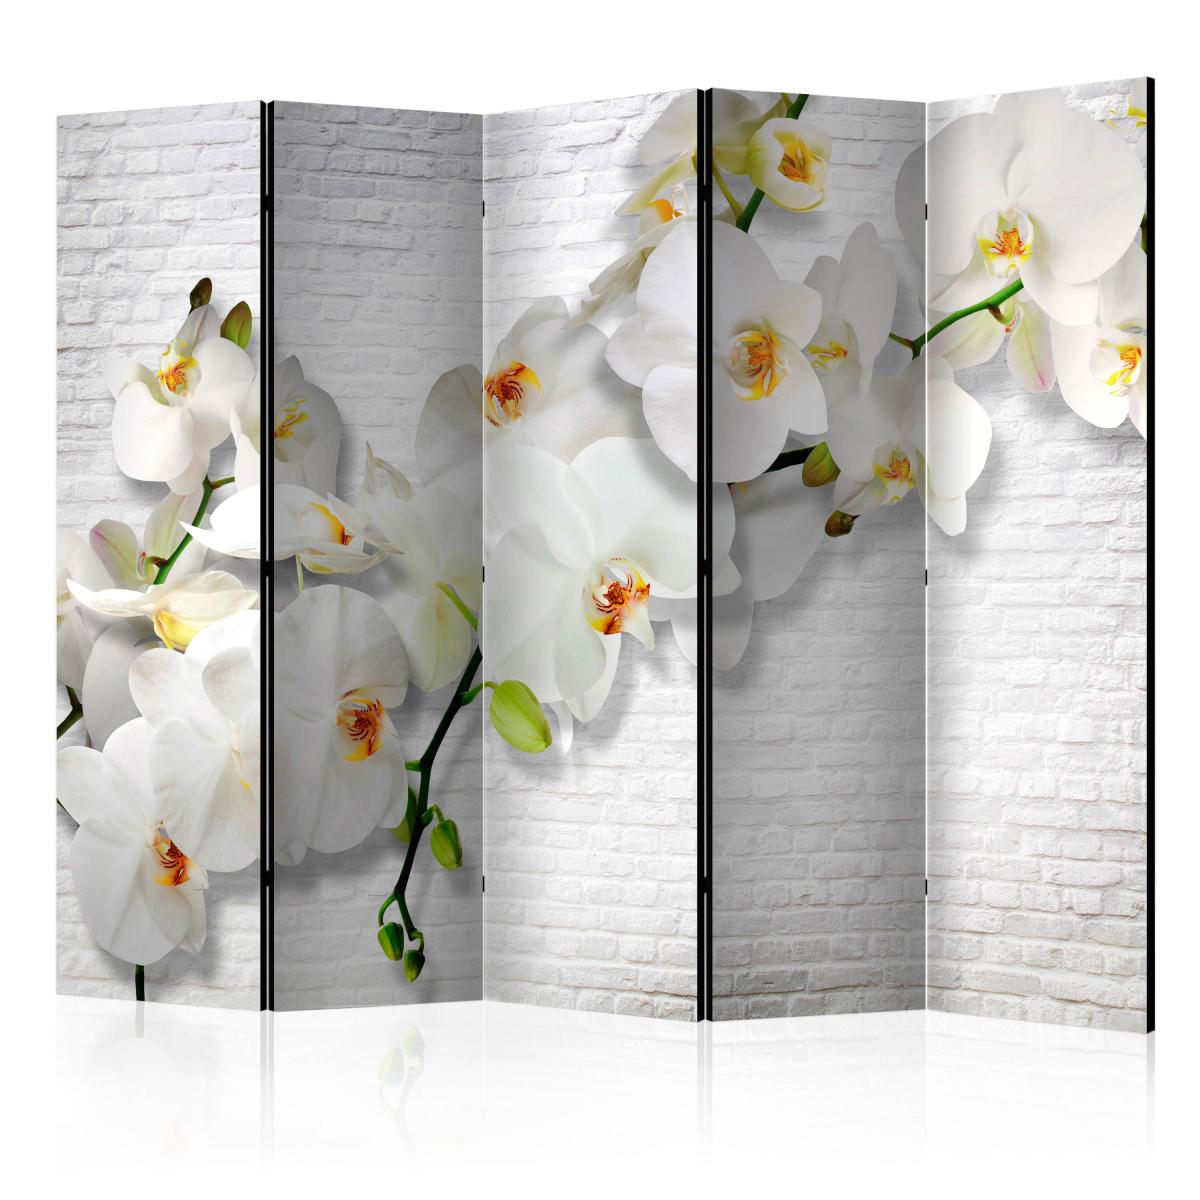 Bimago - Paravent 5 volets - The Urban Orchid II [Room Dividers] - Décoration, image, art | 225x172 cm | XL - Grand Format | - Cloisons